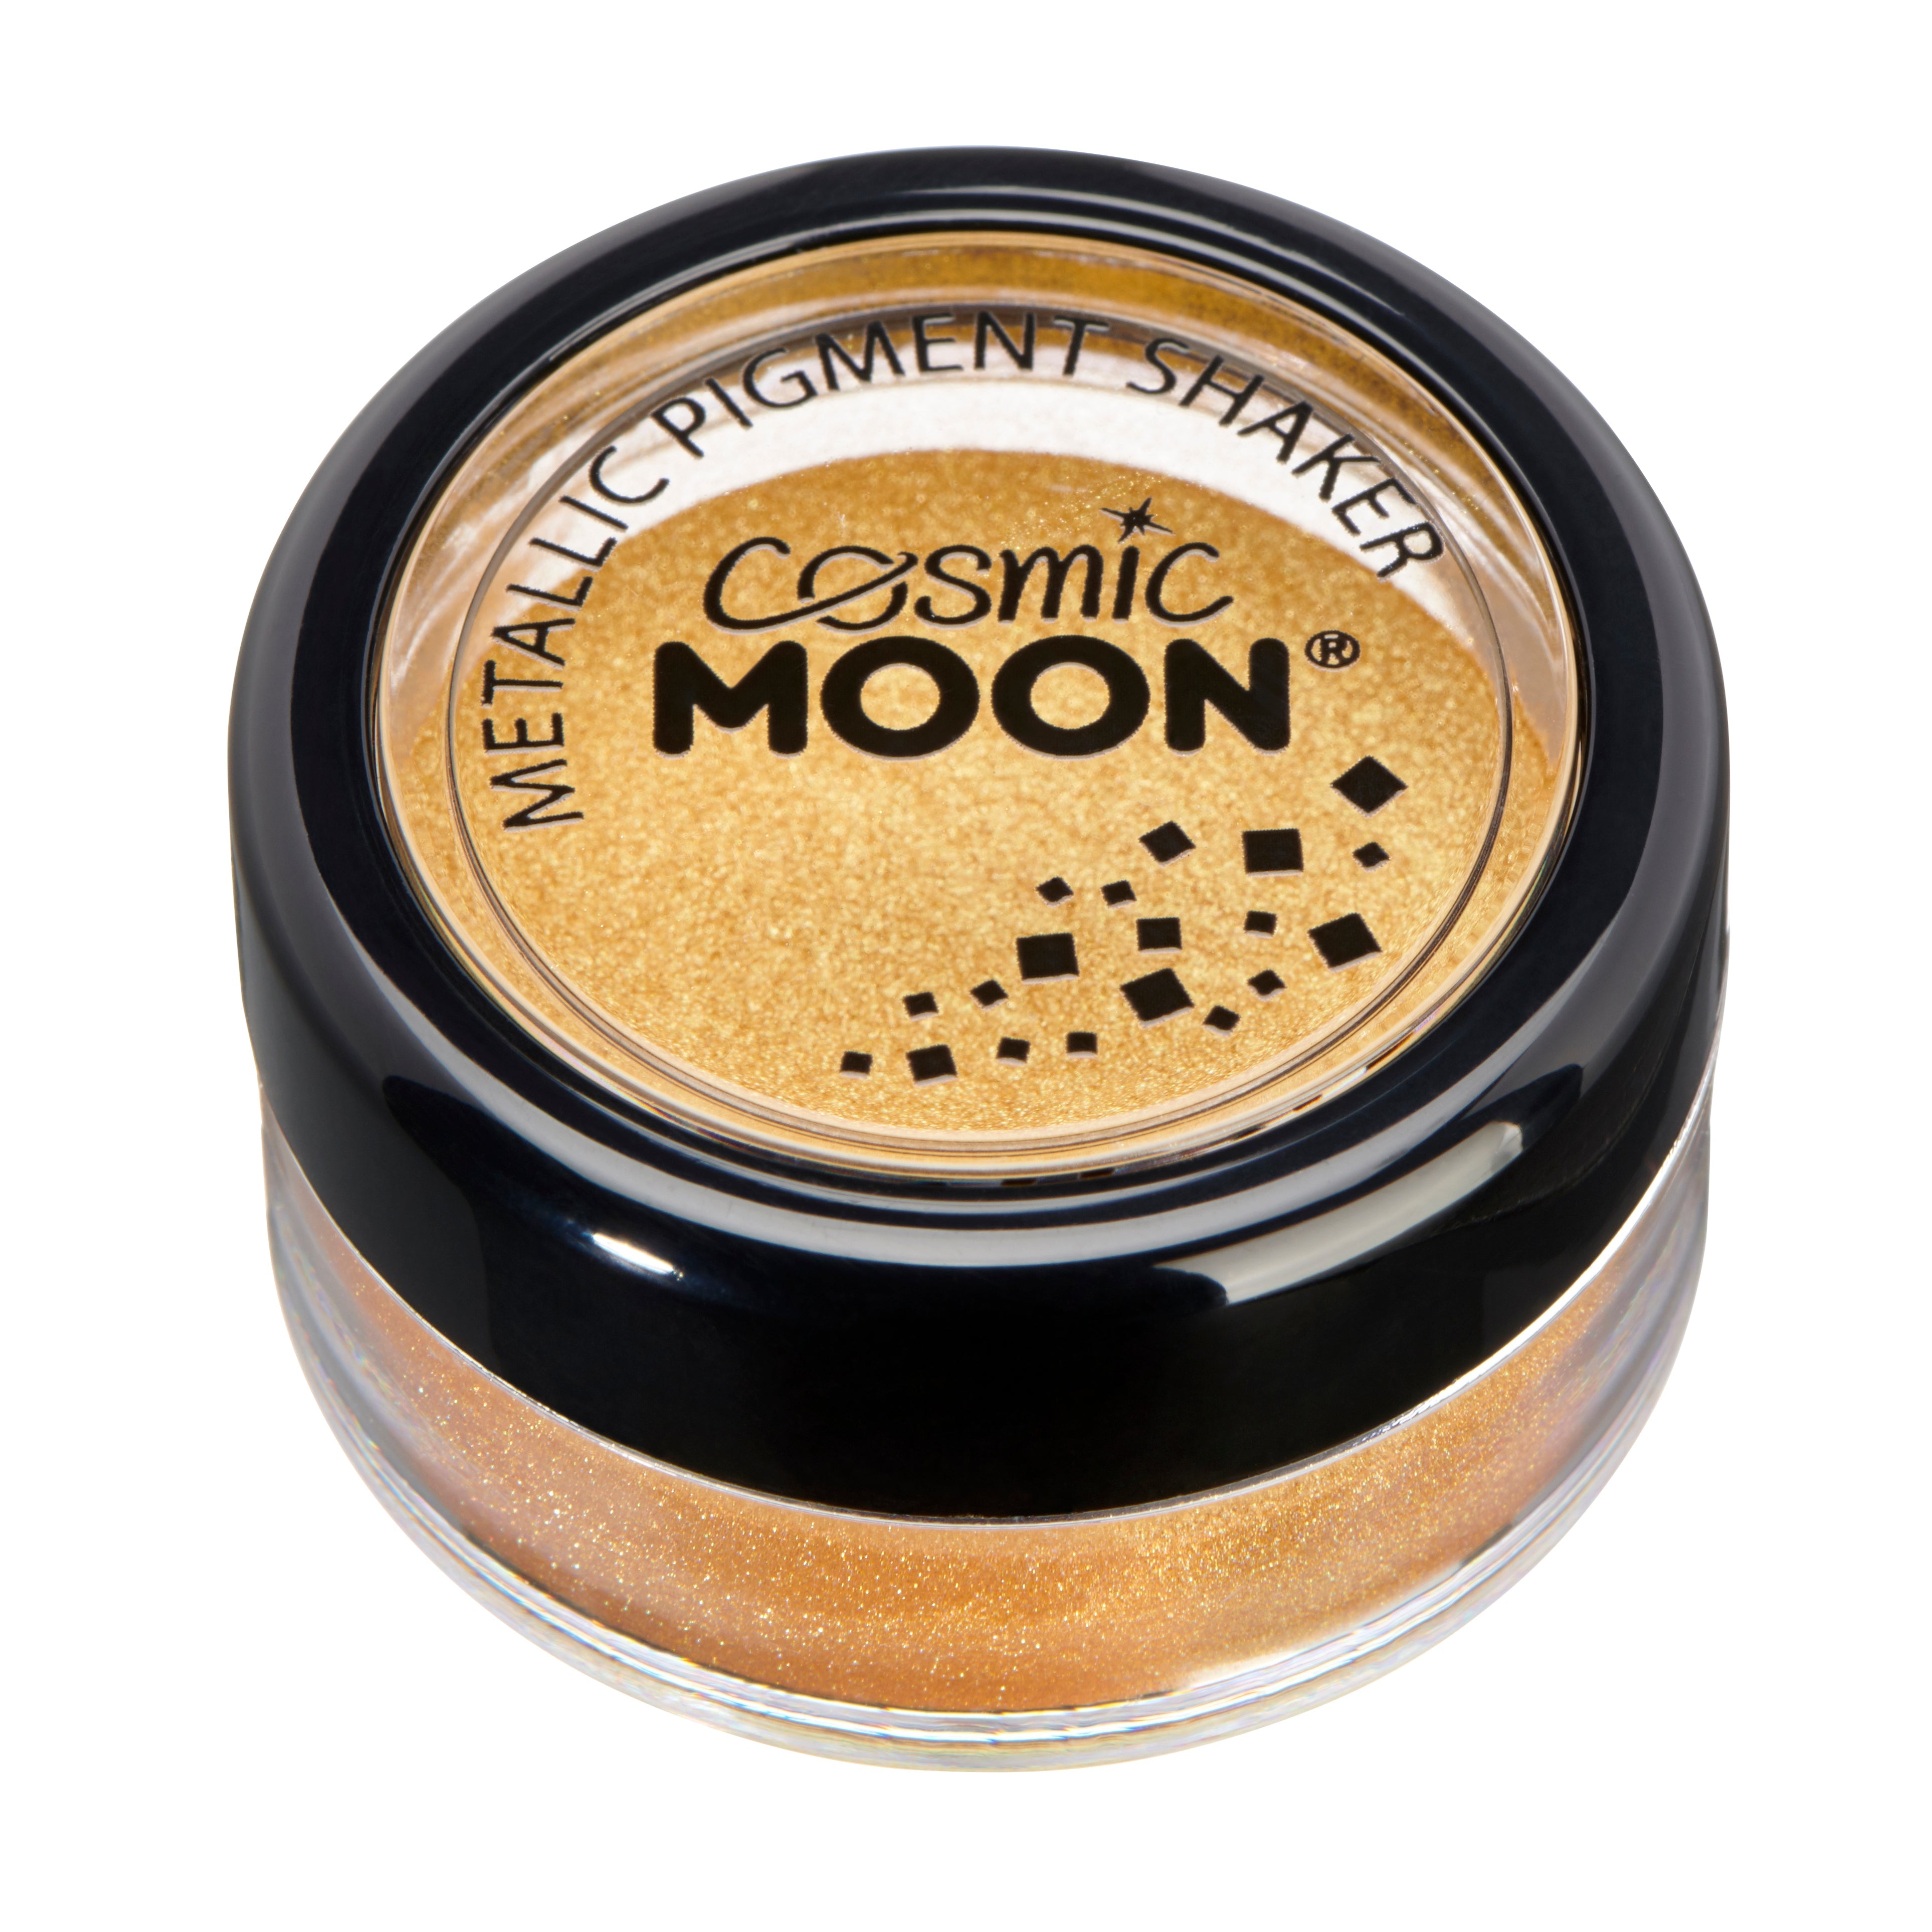 Gold - Metallic Pigment Shaker, 3g. Cosmetically certified, FDA & Health Canada compliant, cruelty free and vegan.